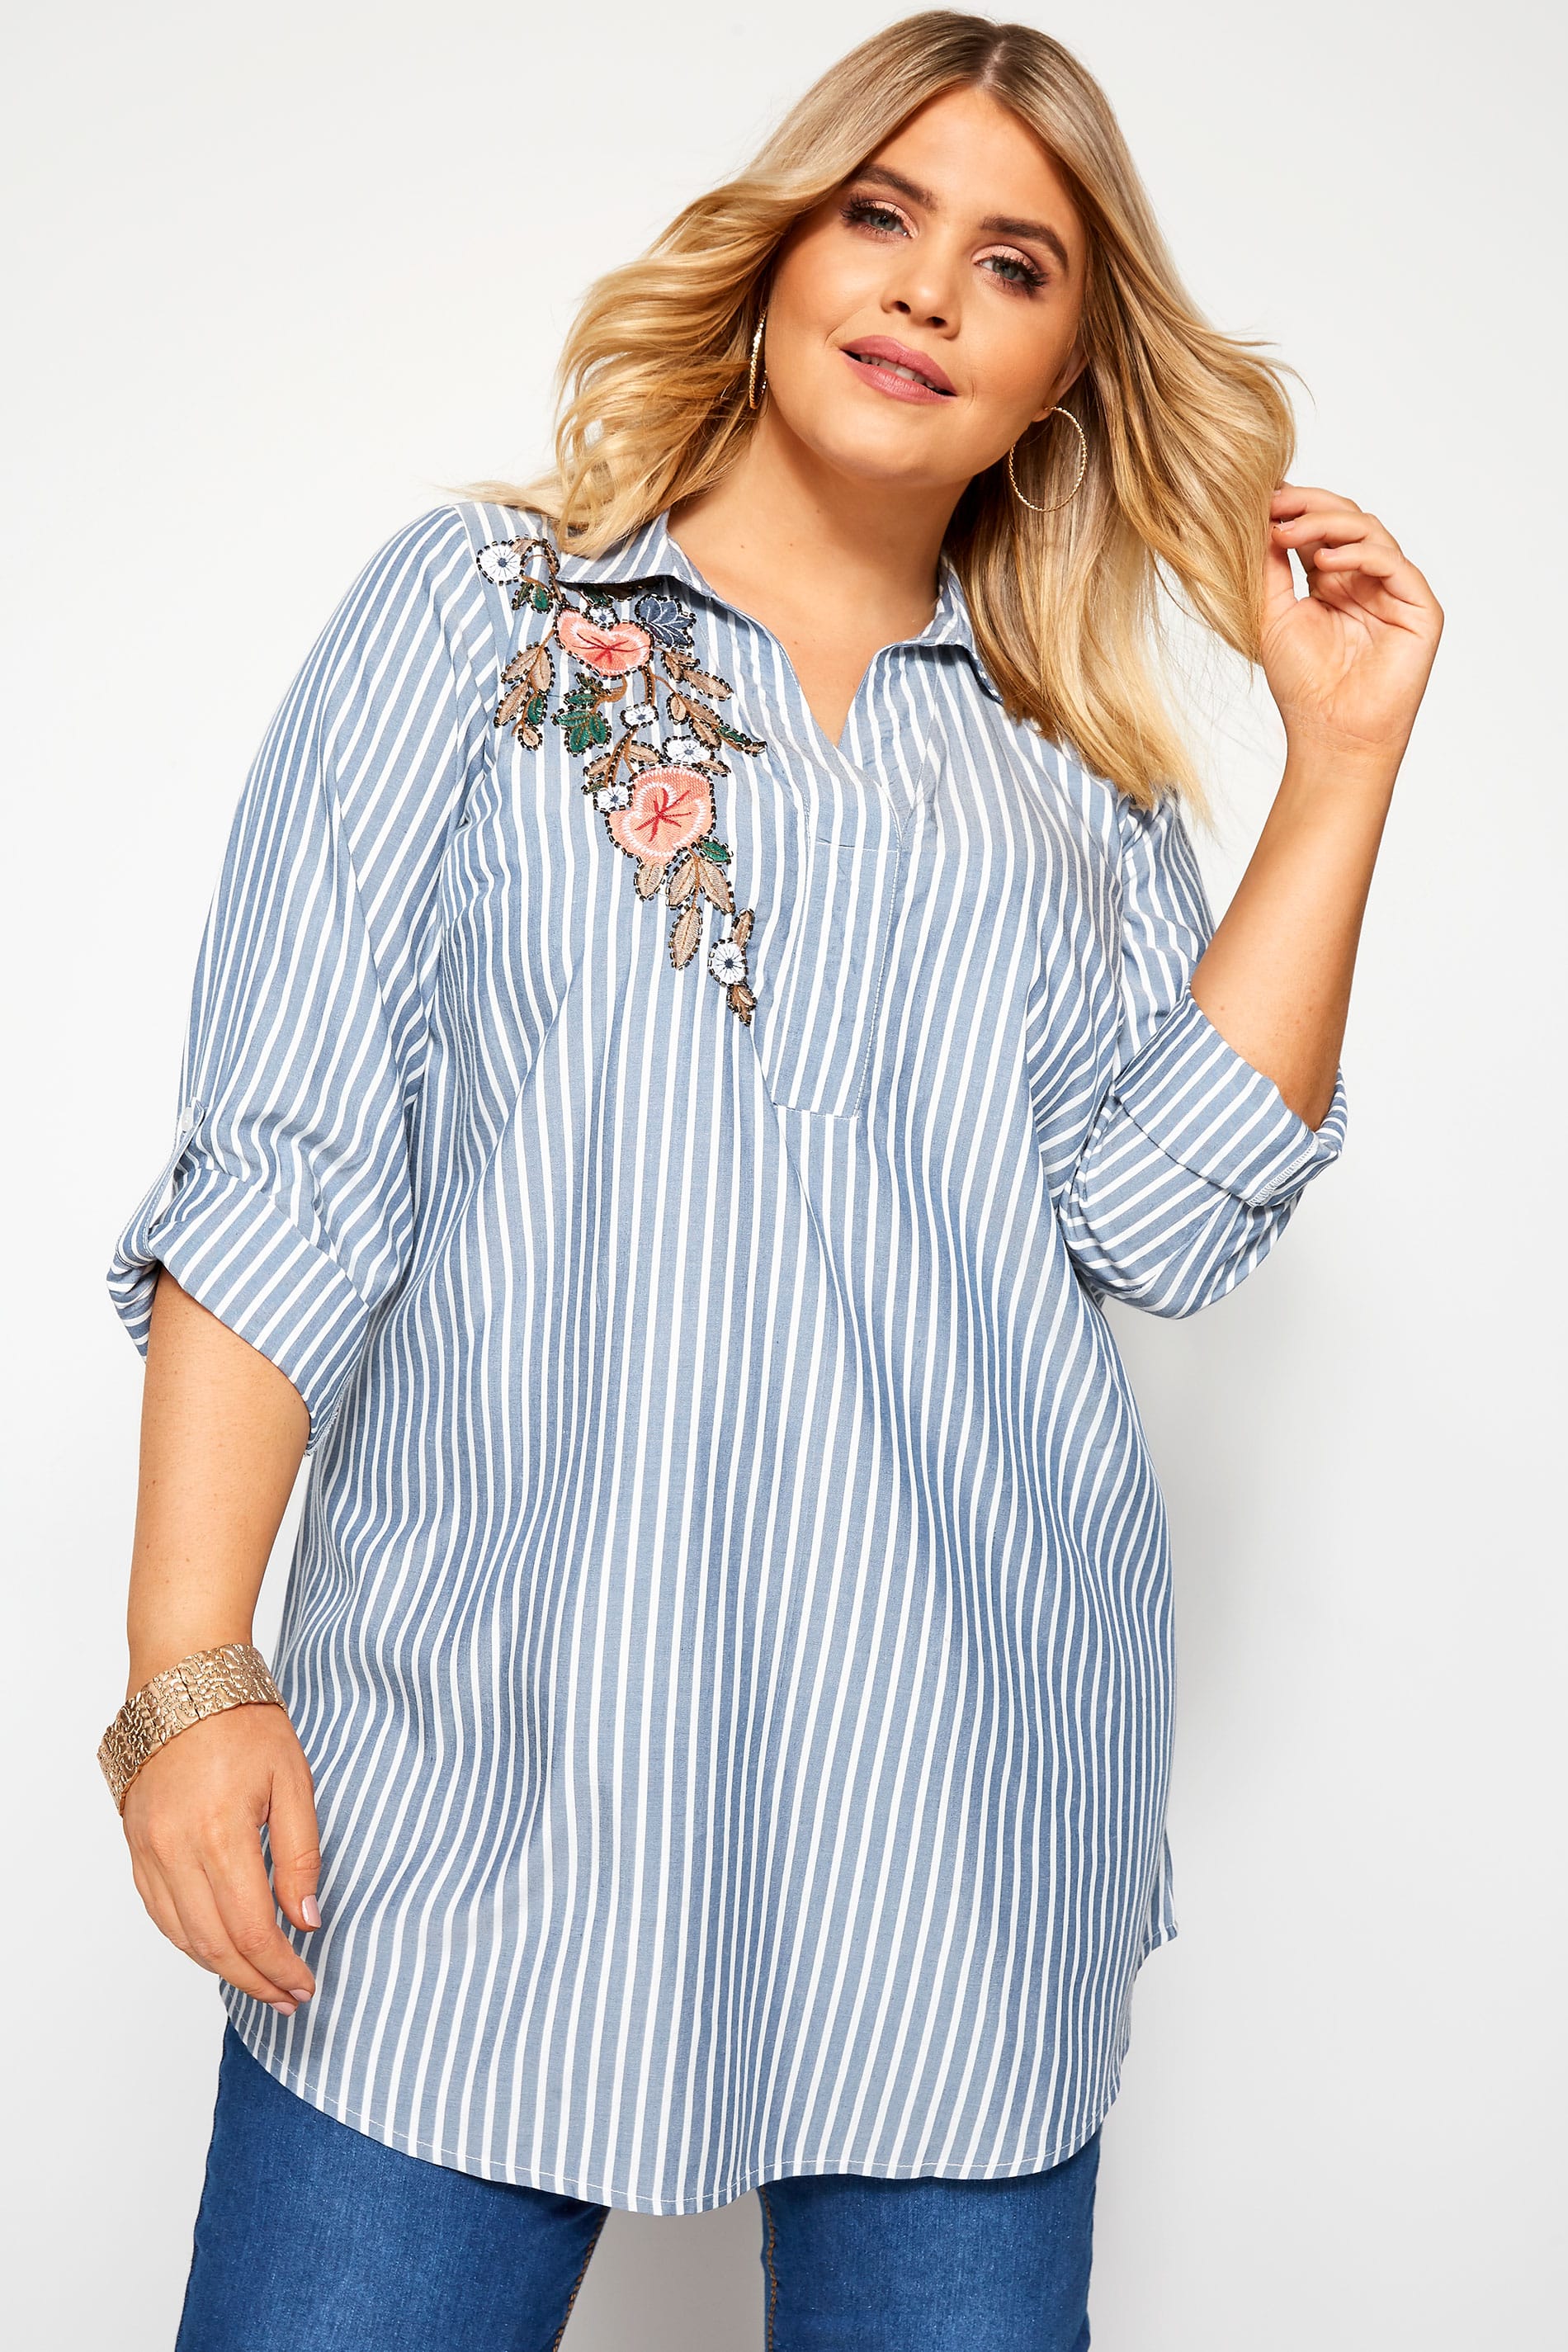 Blue Striped Floral Embellished Shirt | Yours Clothing